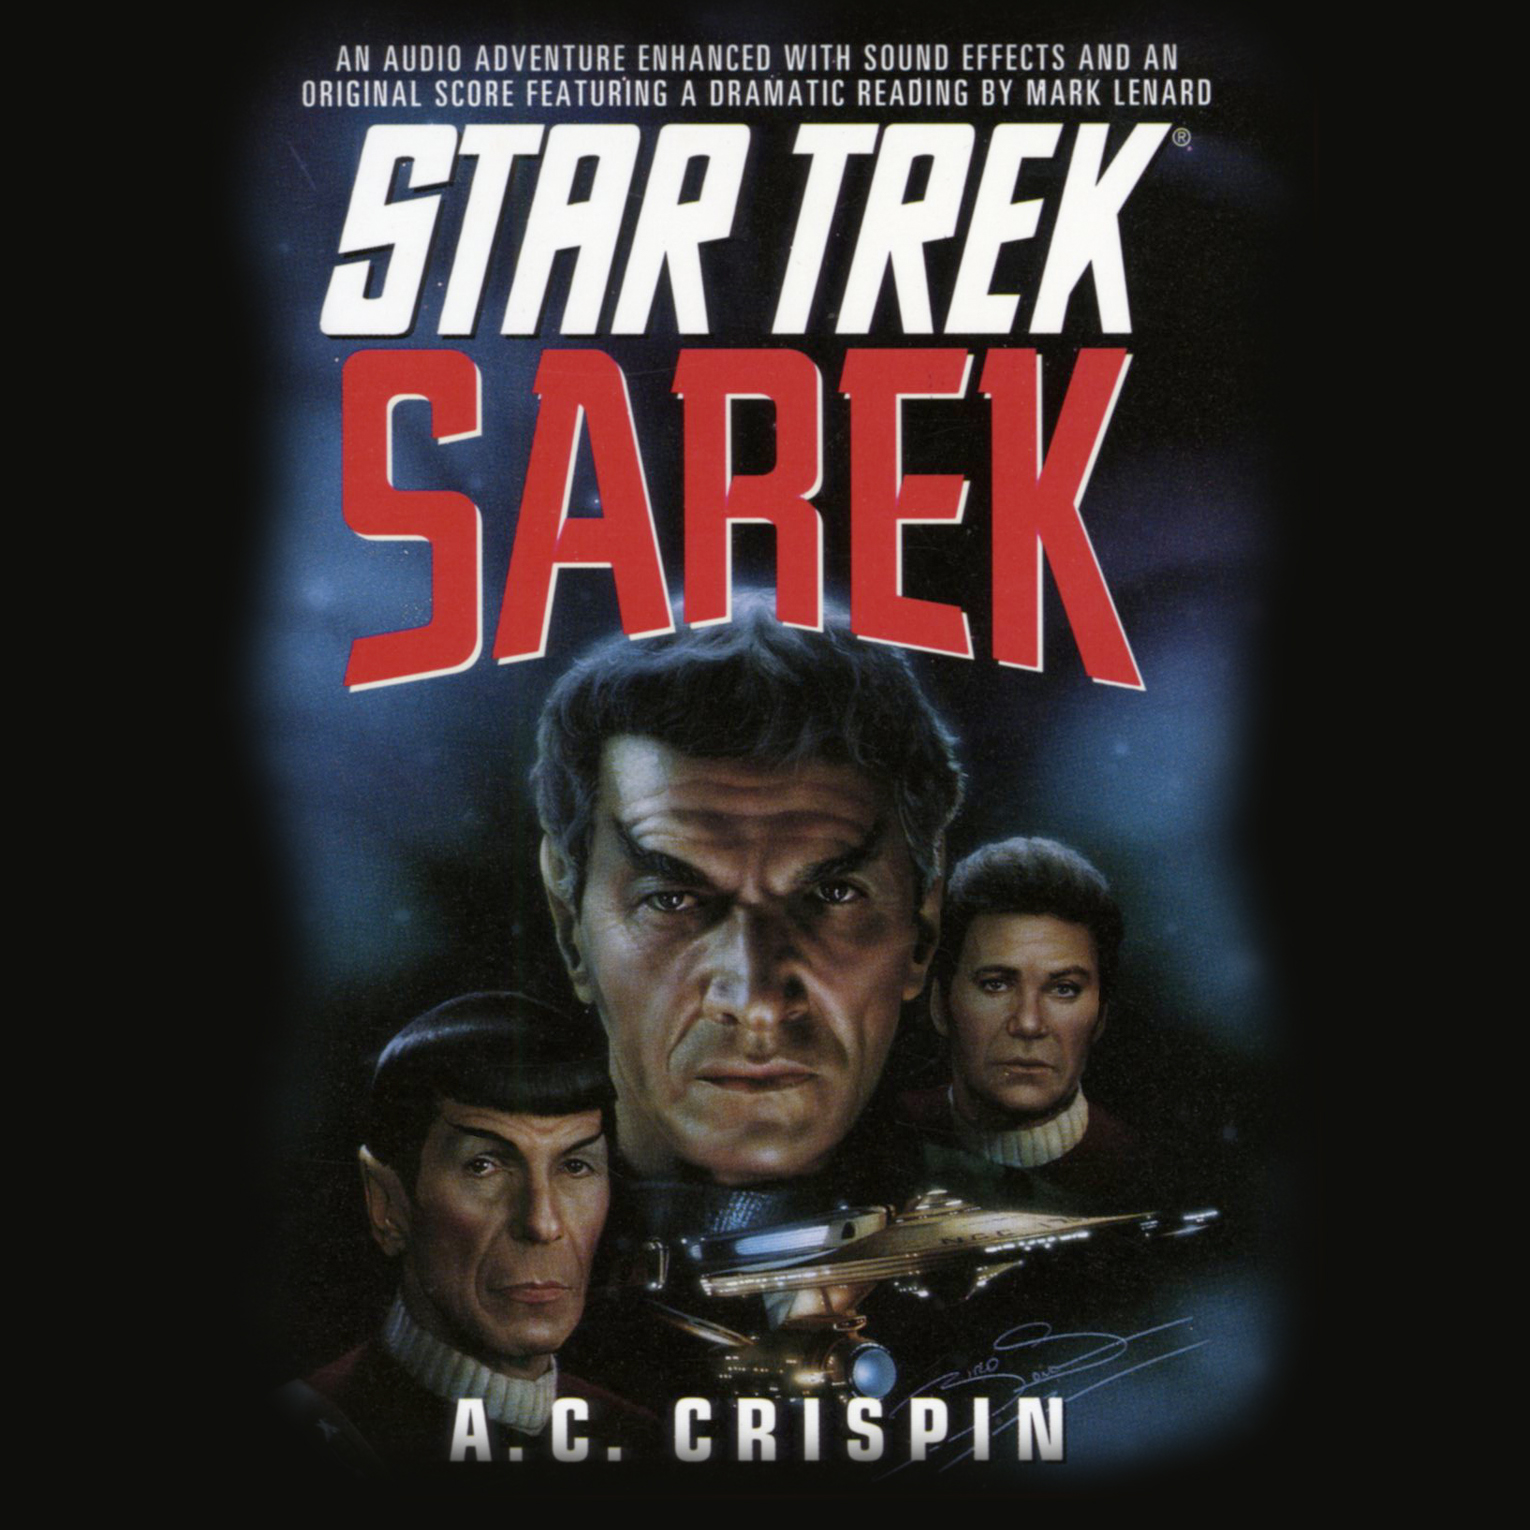 A. C. Crispin: Star Trek: Sarek (AudiobookFormat, 2012)